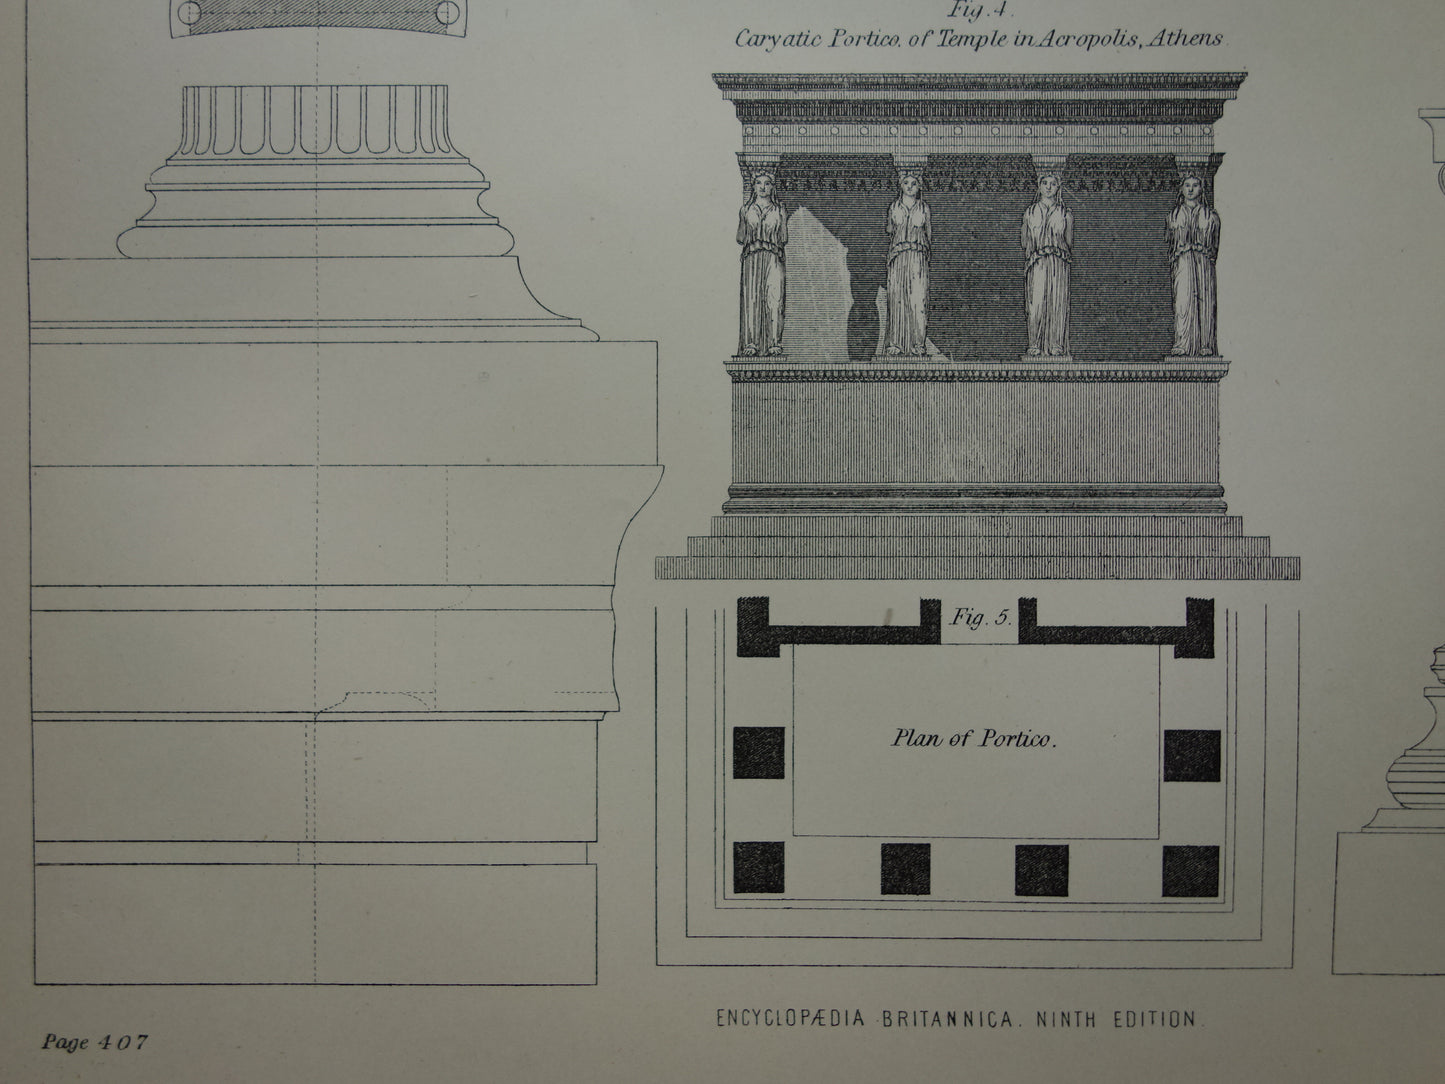 Oude architectuur prent Griekse Oudheid Originele antieke illustratie Erechtheion tempel Monument van Lysicrates Athene vintage print